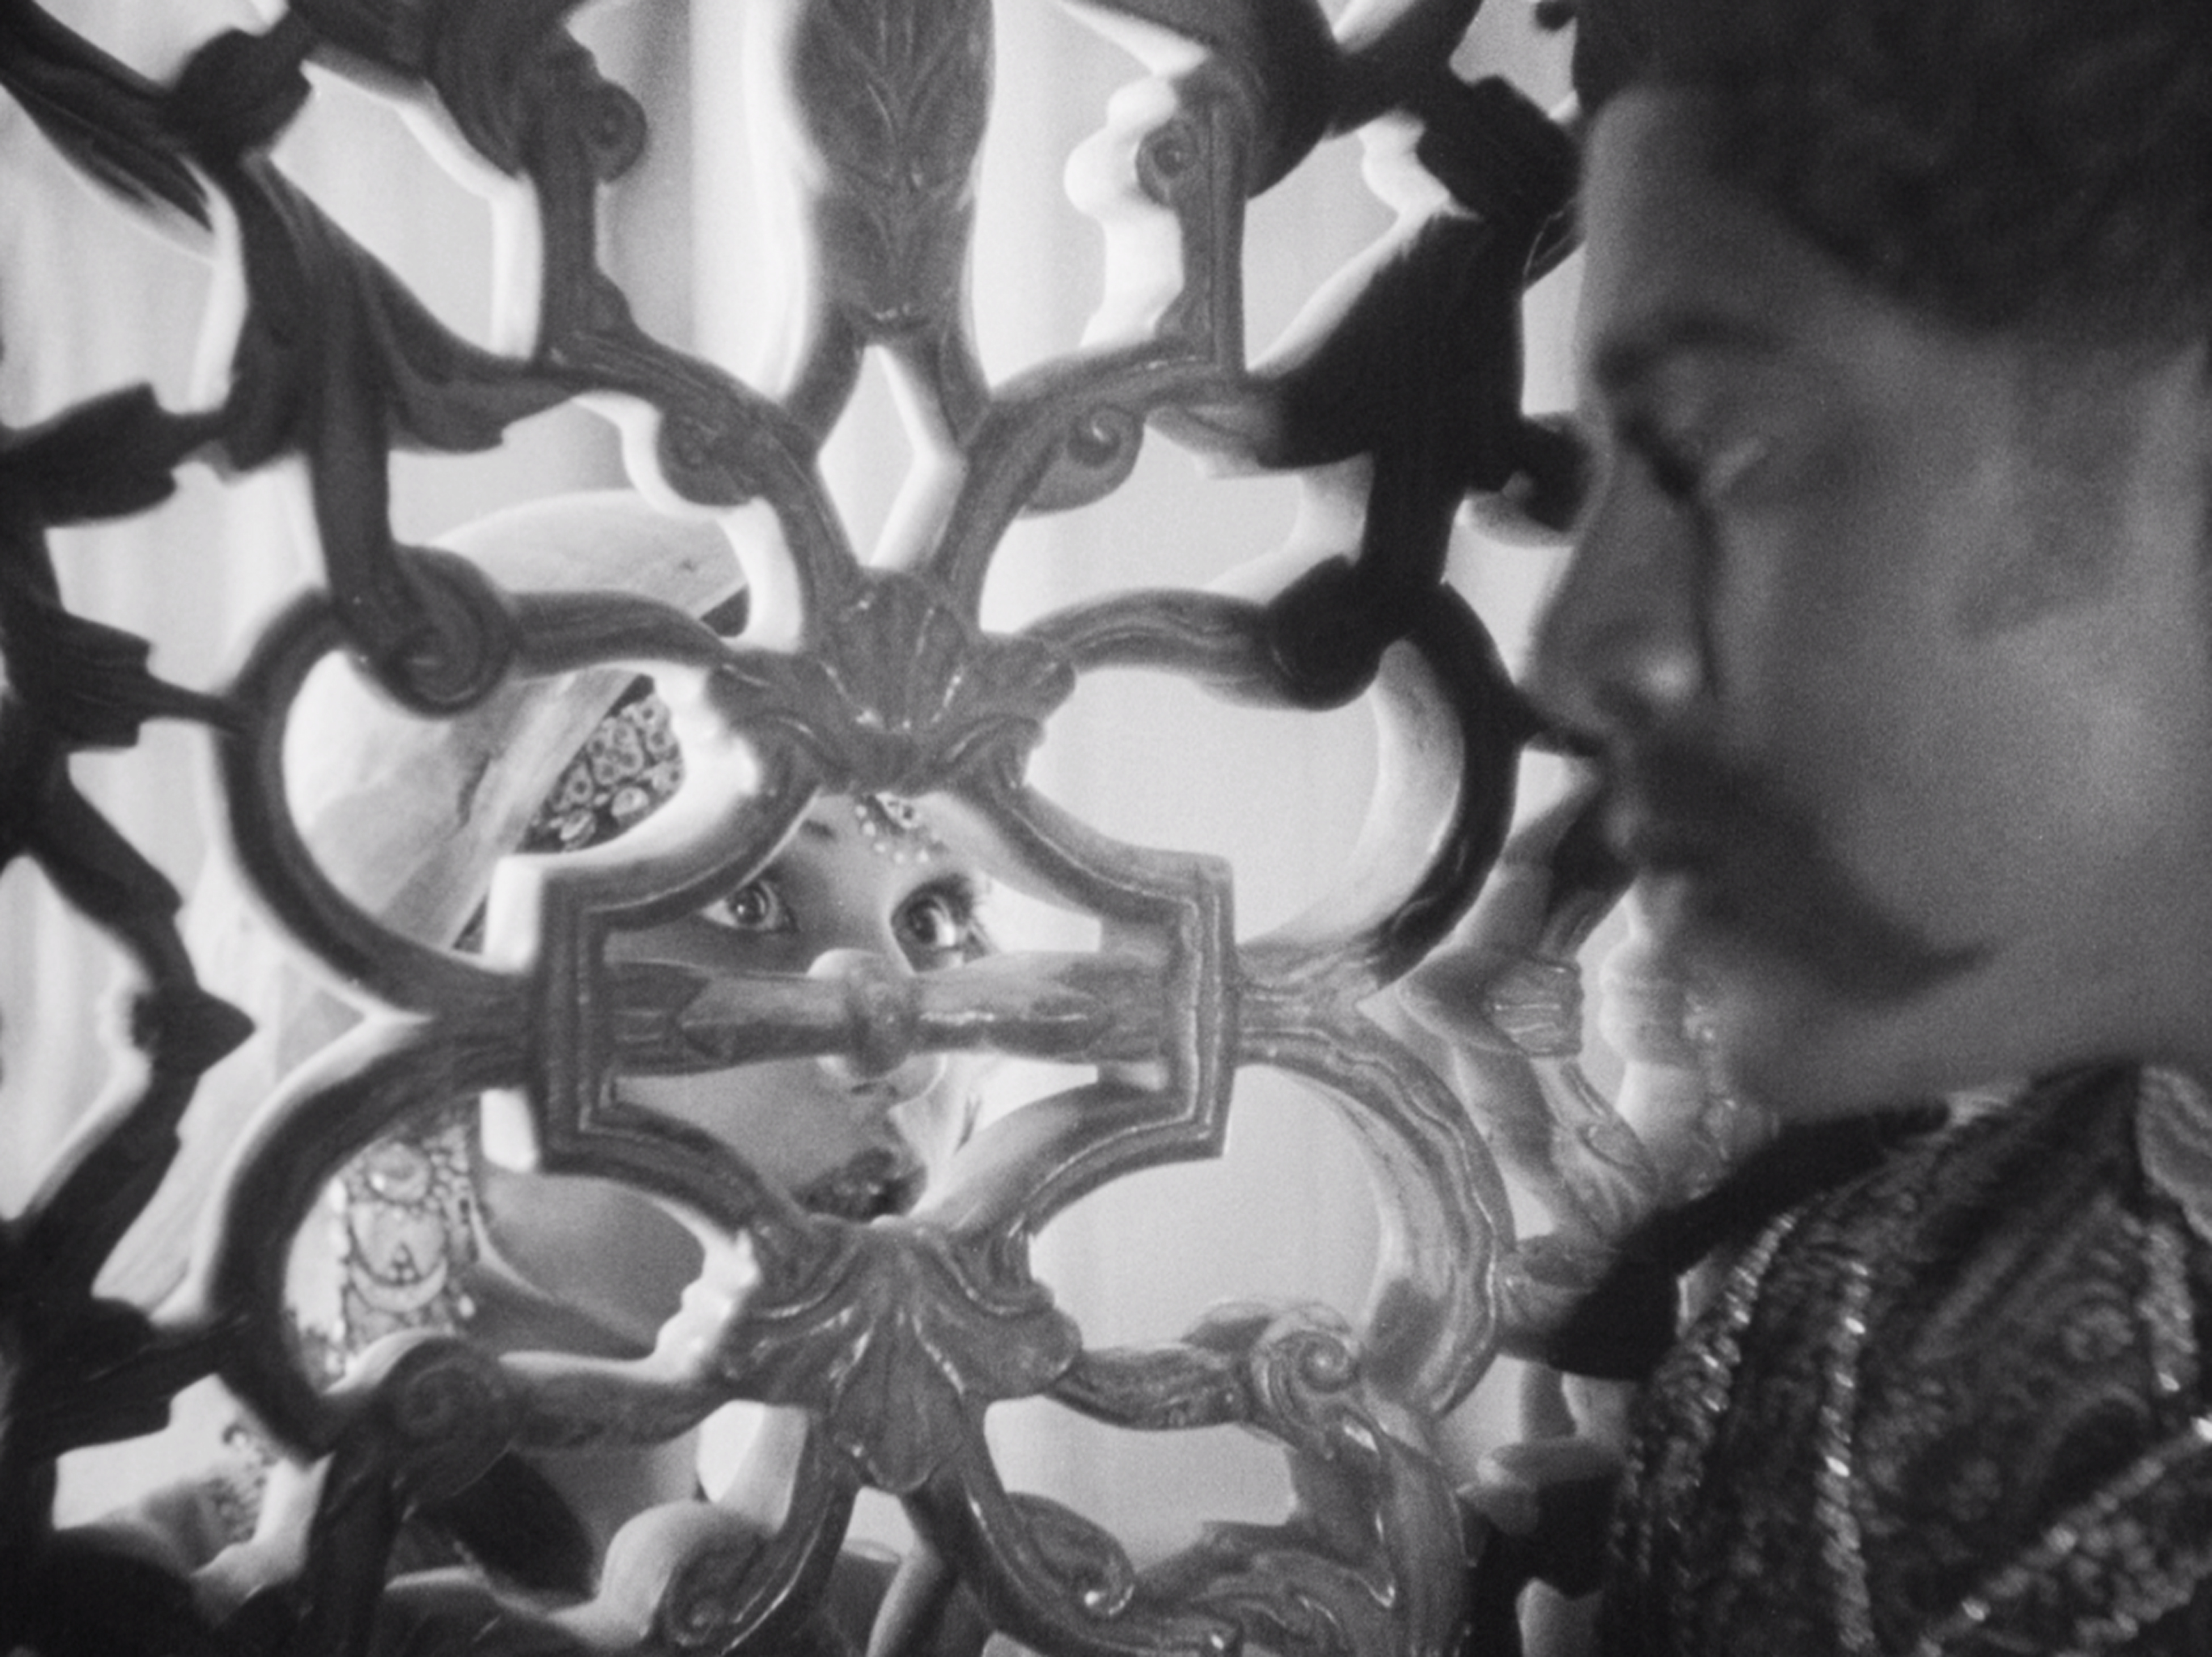 Shiraz: A Romance of India (1928, BFI National Archive)